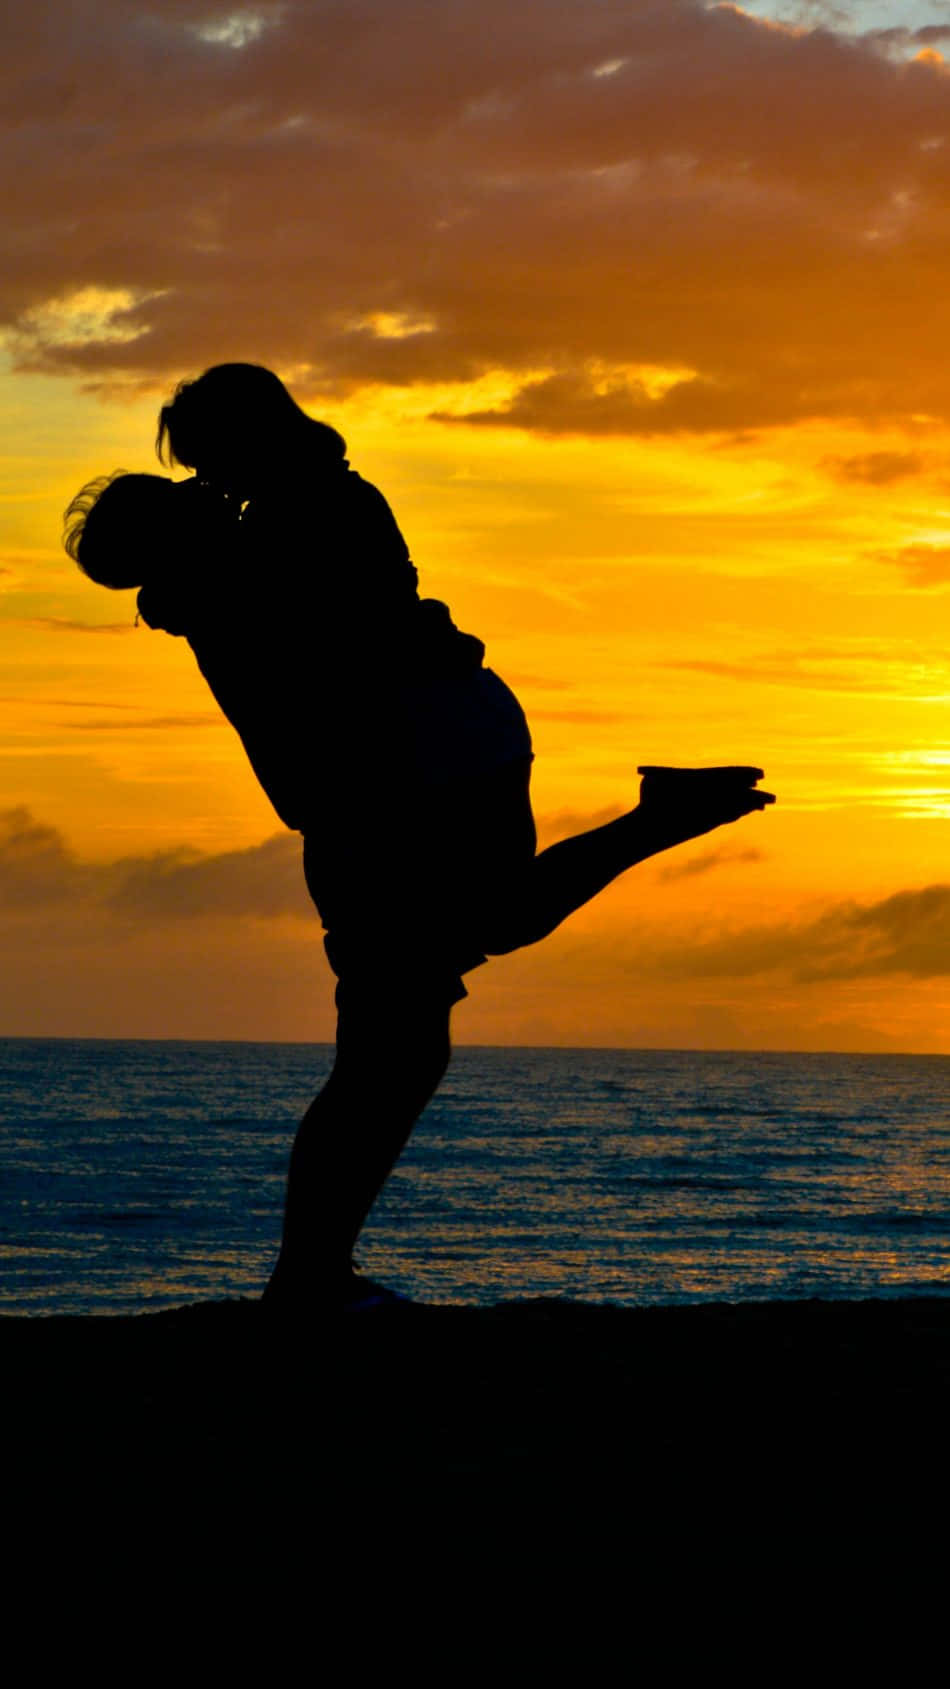 Glade par kysser med solnedgang strand romantisk baggrund